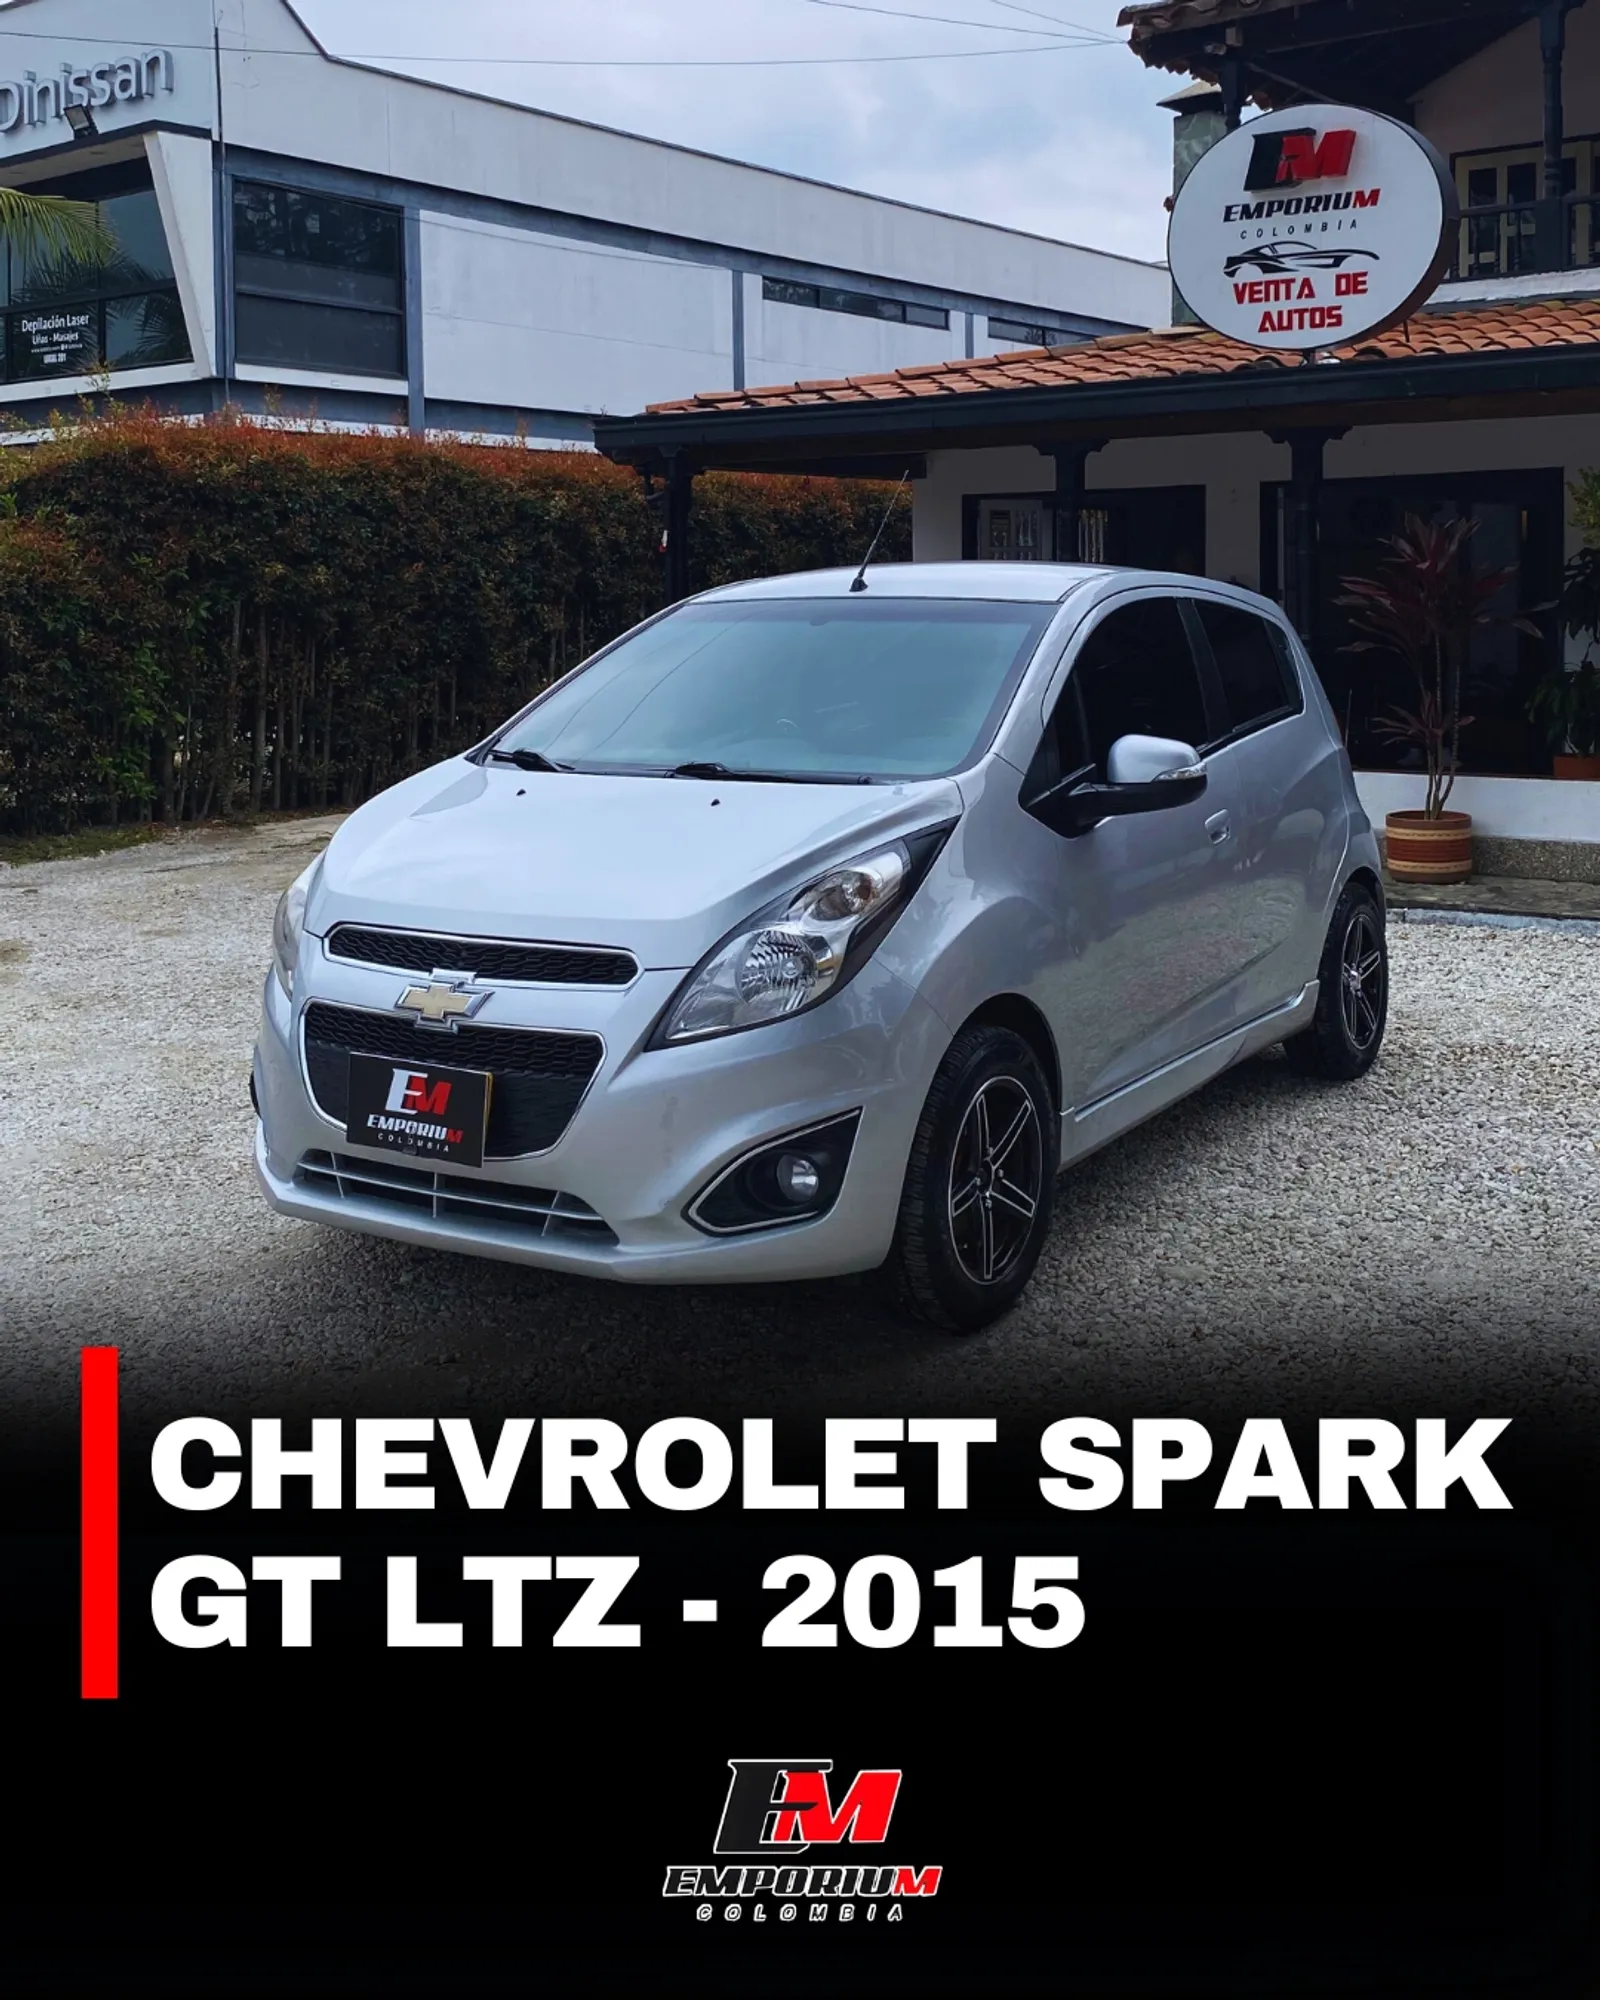 Chevrolet Spark GT LTZ 2015